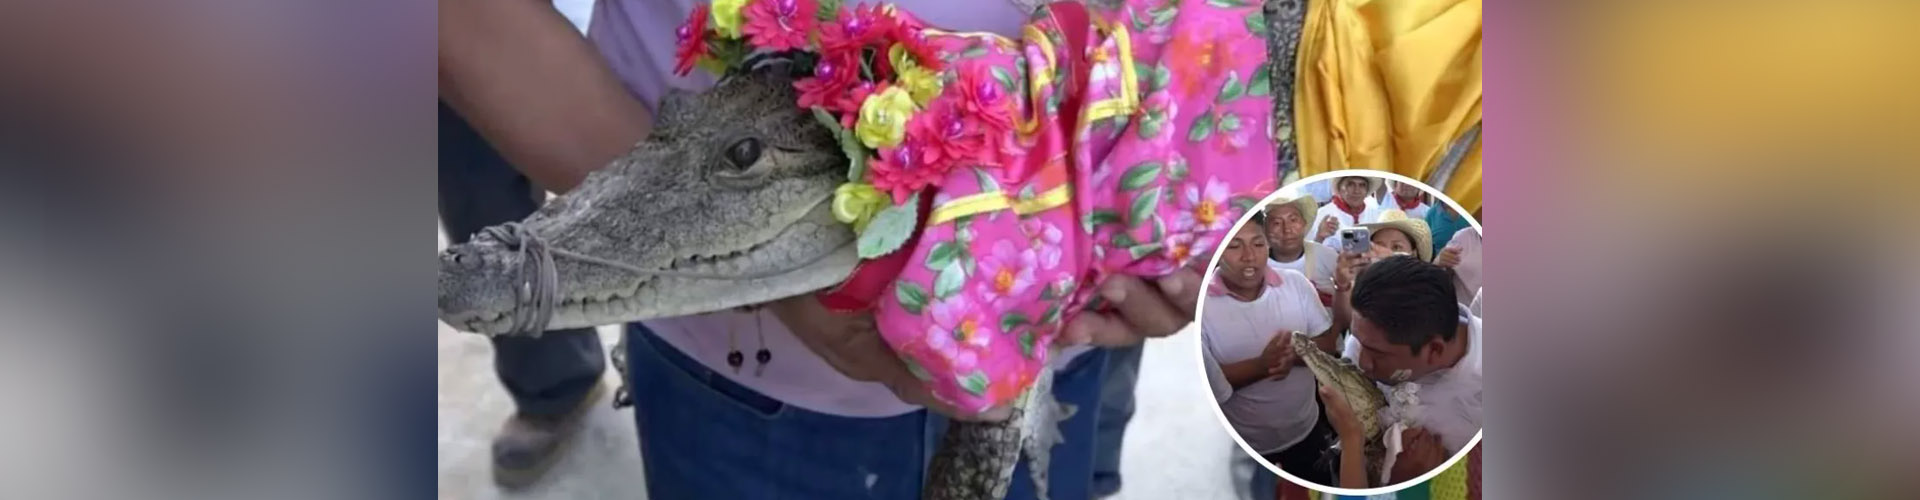 Alcalde de Oaxaca se casa con una lagarta en San Pedro Huamelula